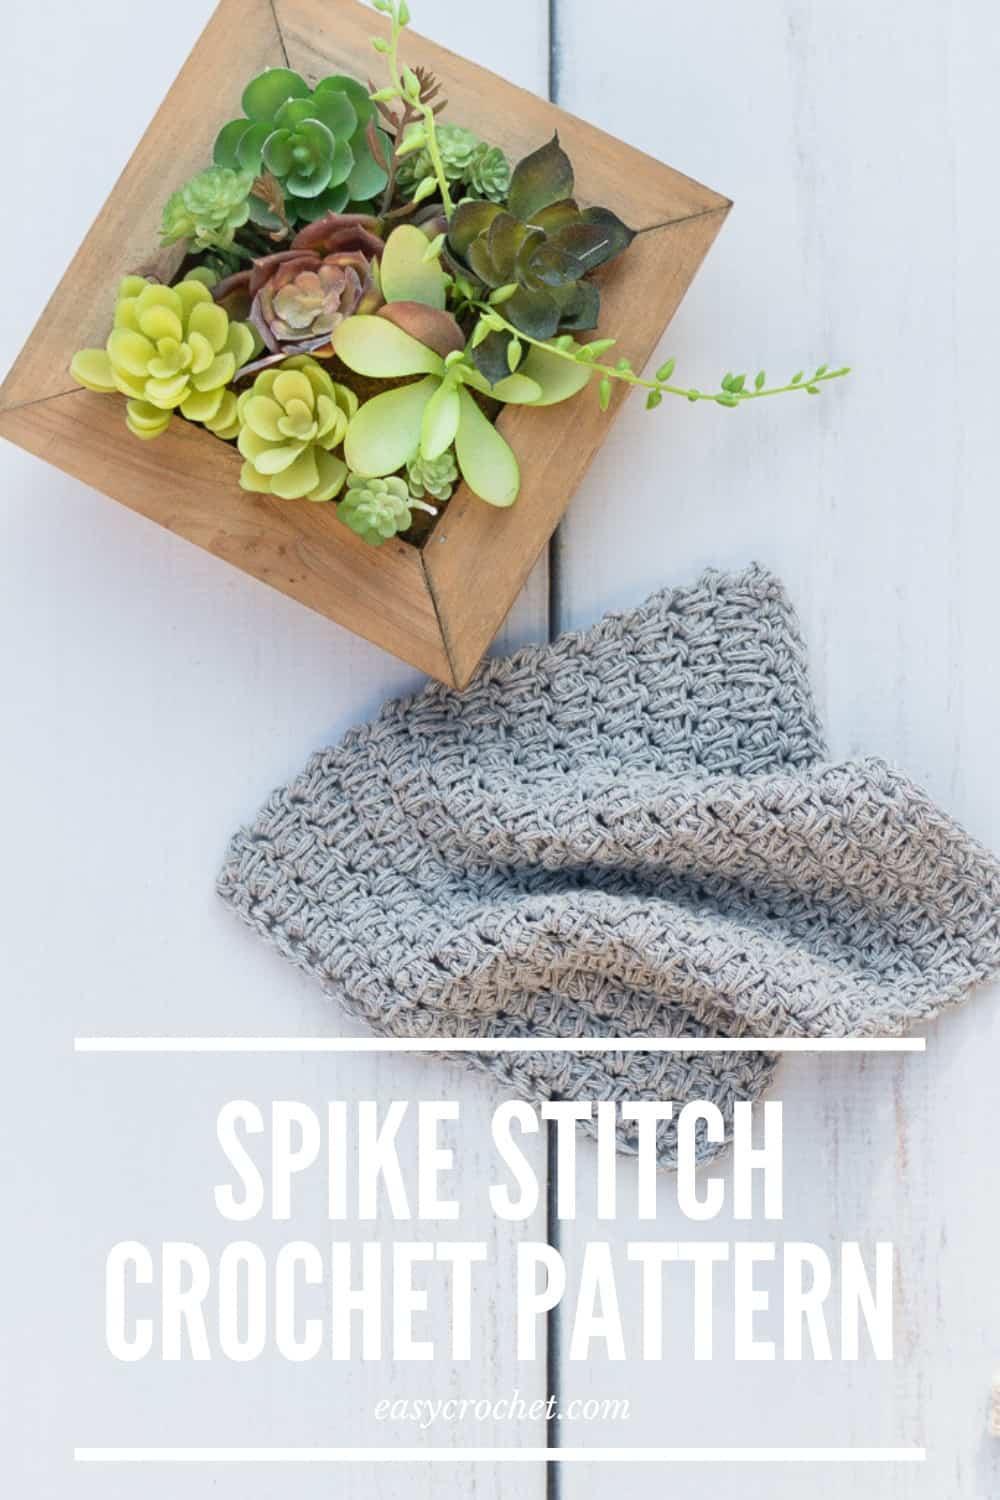 Free Spike Stitch Crochet Dishcloth Pattern via @easycrochetcom